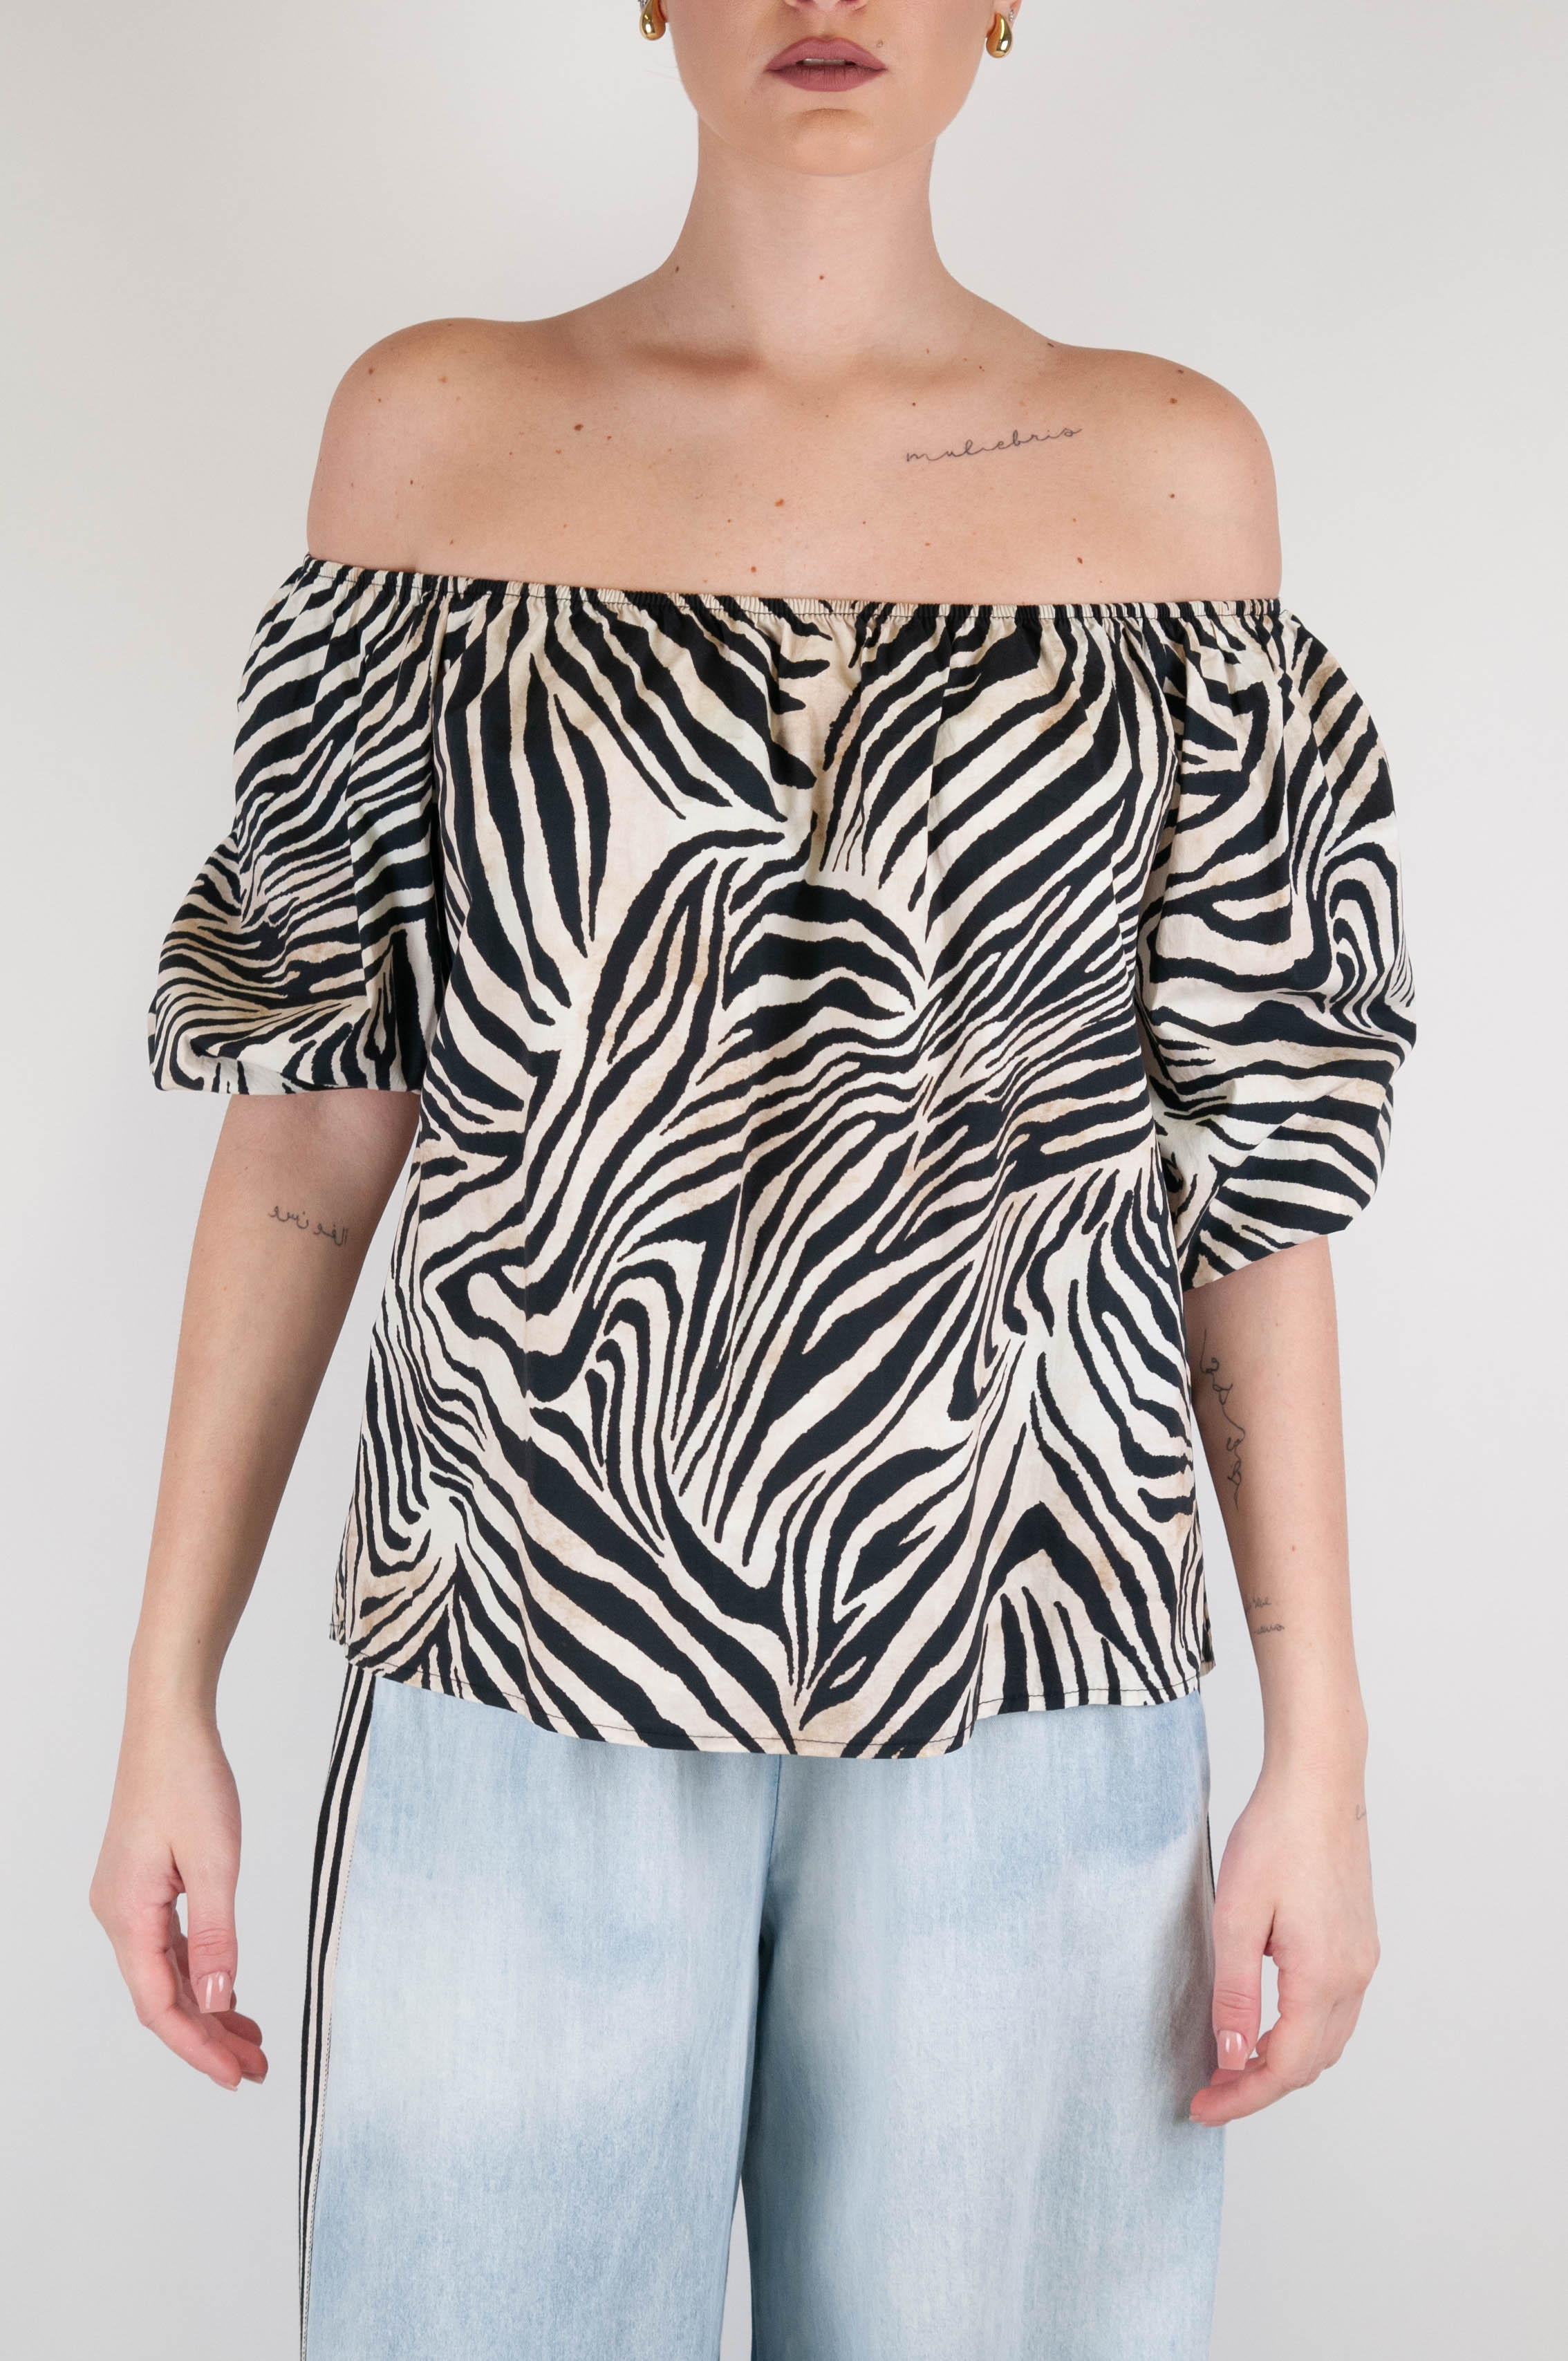 Tension in - Zebra animal print top with shiffer neckline